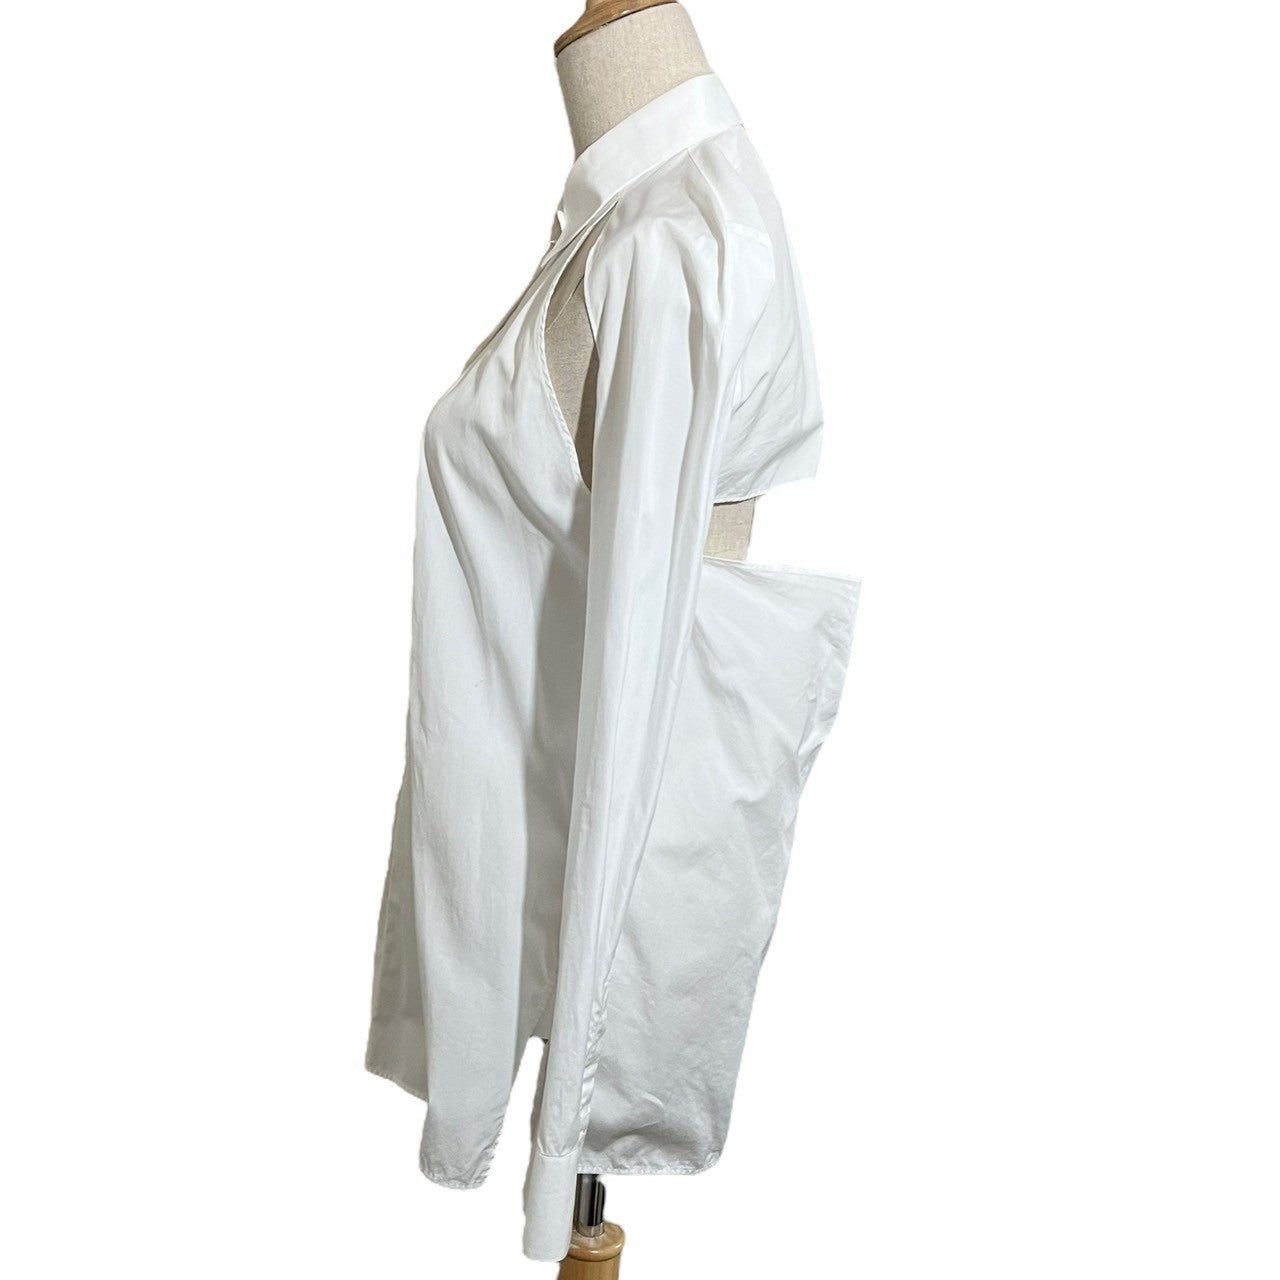 MAISON MARGIELA(メゾンマルジェラ) 18SS Back hole, side cut, long sleeve shirt 背面・袖カット 長袖 シャツ S51DL0247 S44720 40(L程度) ホワイト